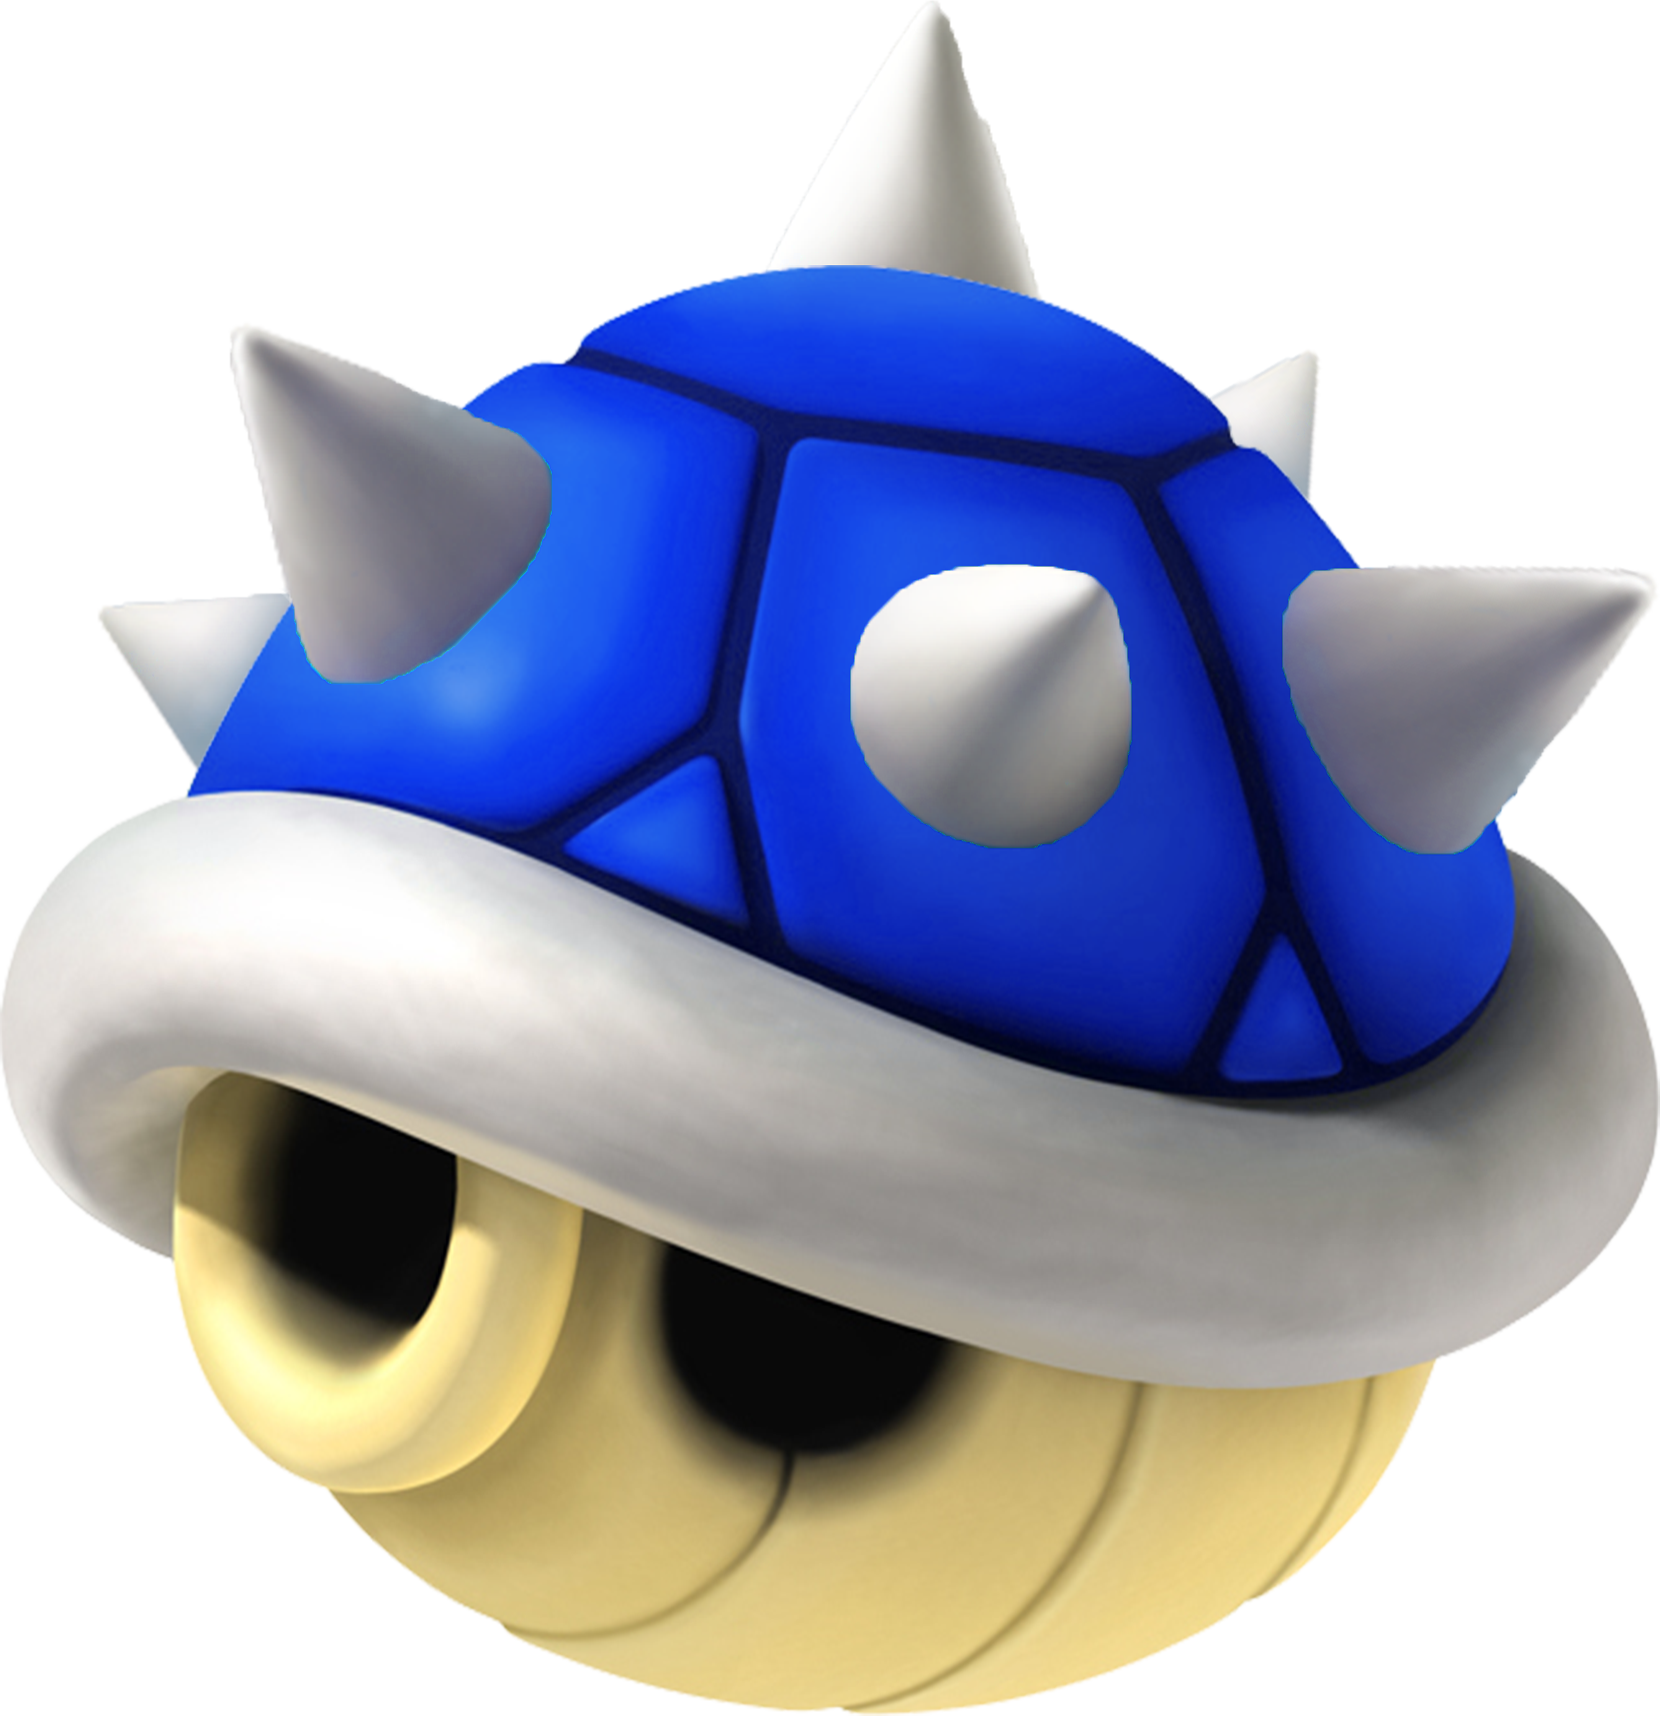 Mario Kart - Blue Shell Mario Kart 64 (1660x1716)